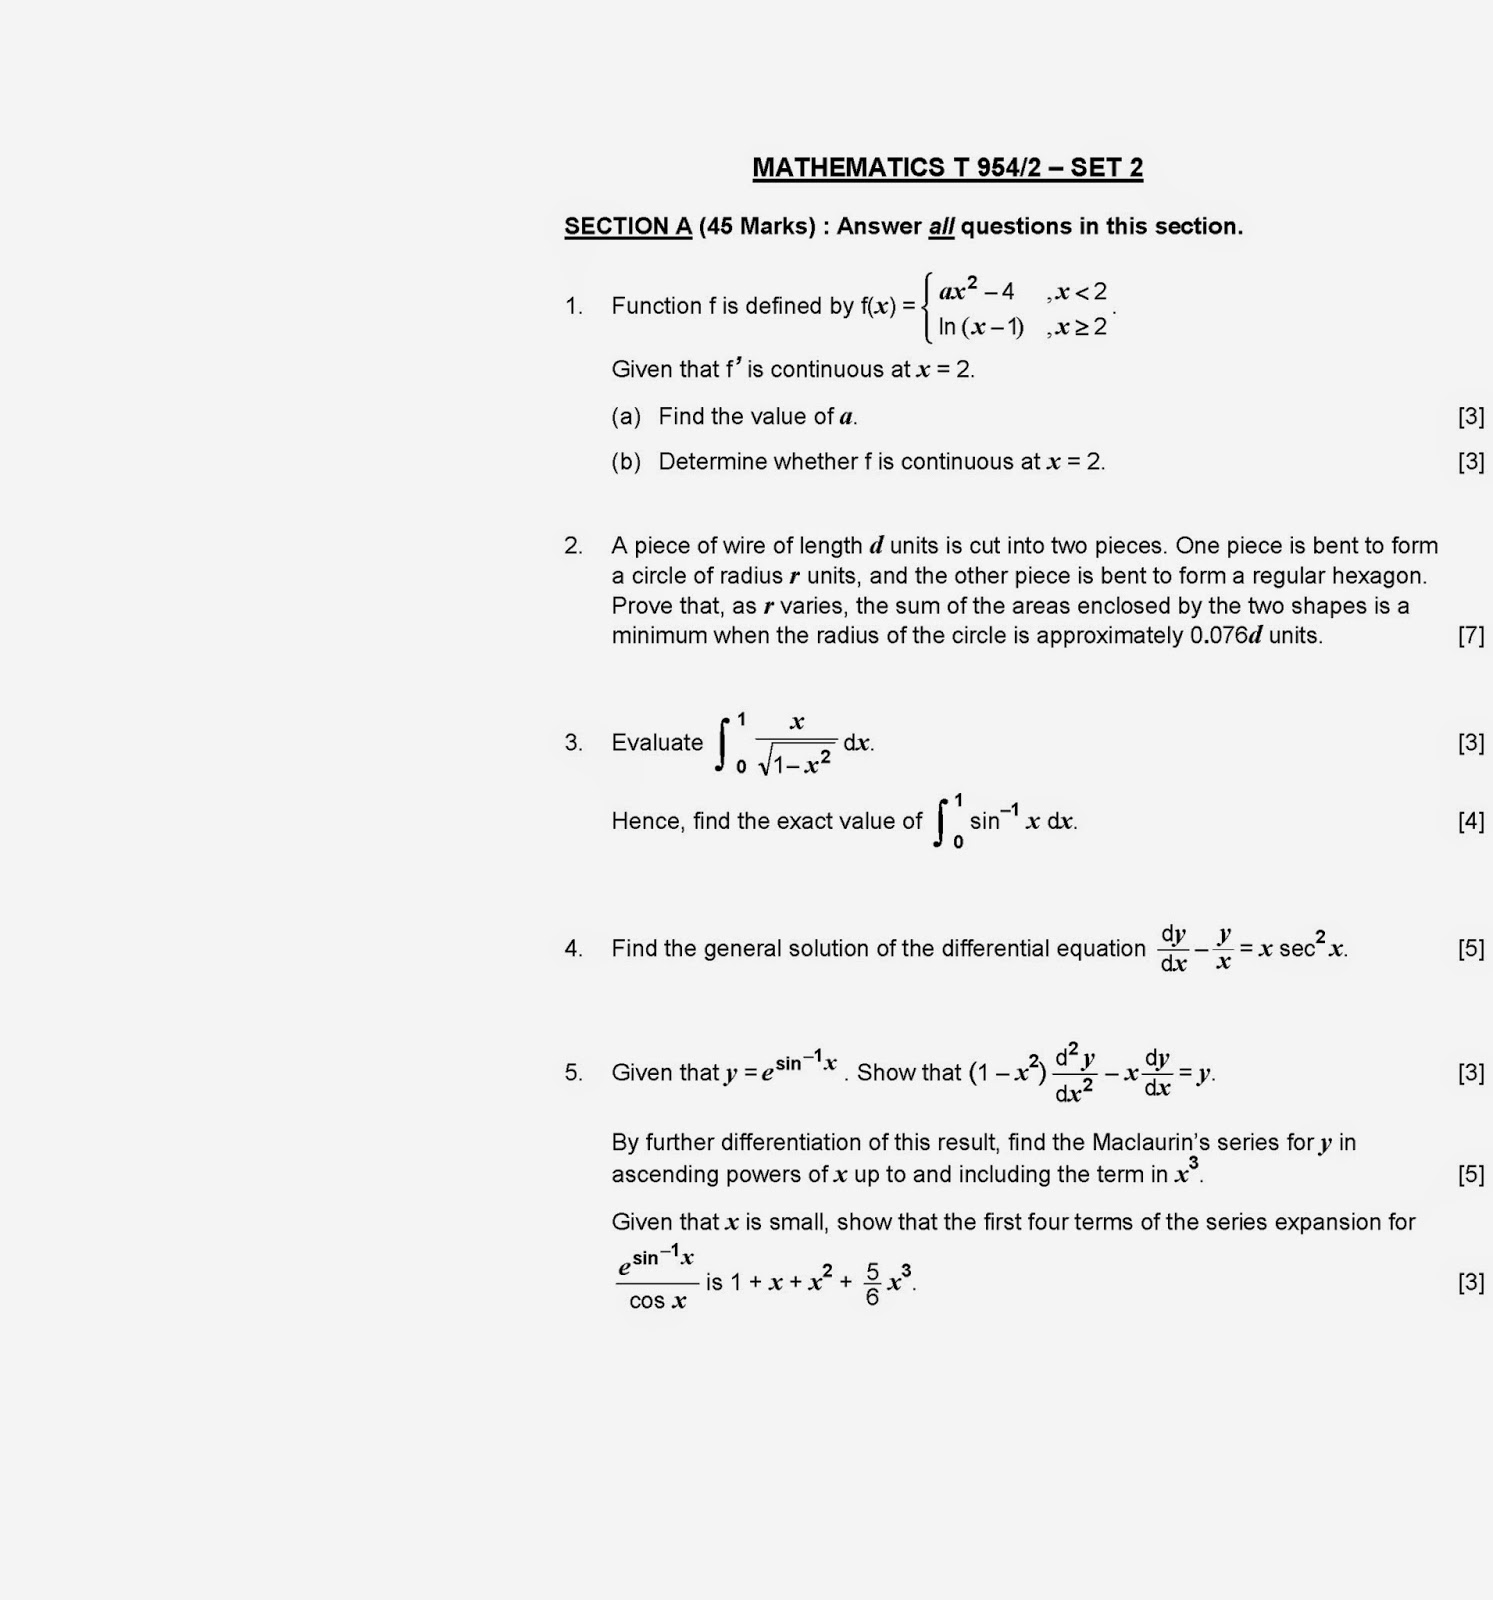 stpm mathematics t coursework 2013 sem 1 answer